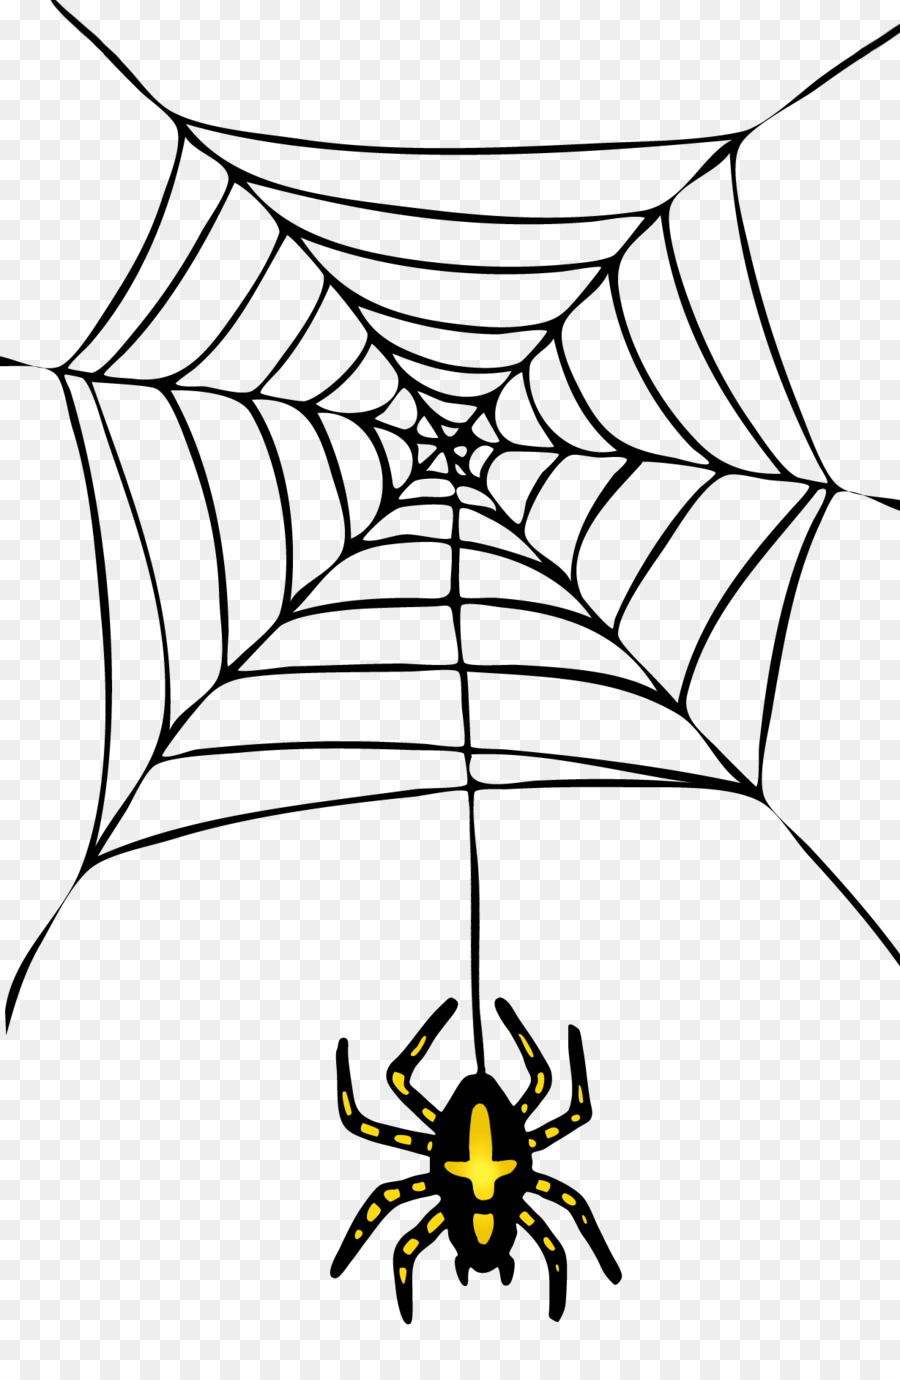 Spider Halloween Clip art - Halloween Spider Transparent PNG png download - 1229*1883 - Free Transparent Spider png Download.